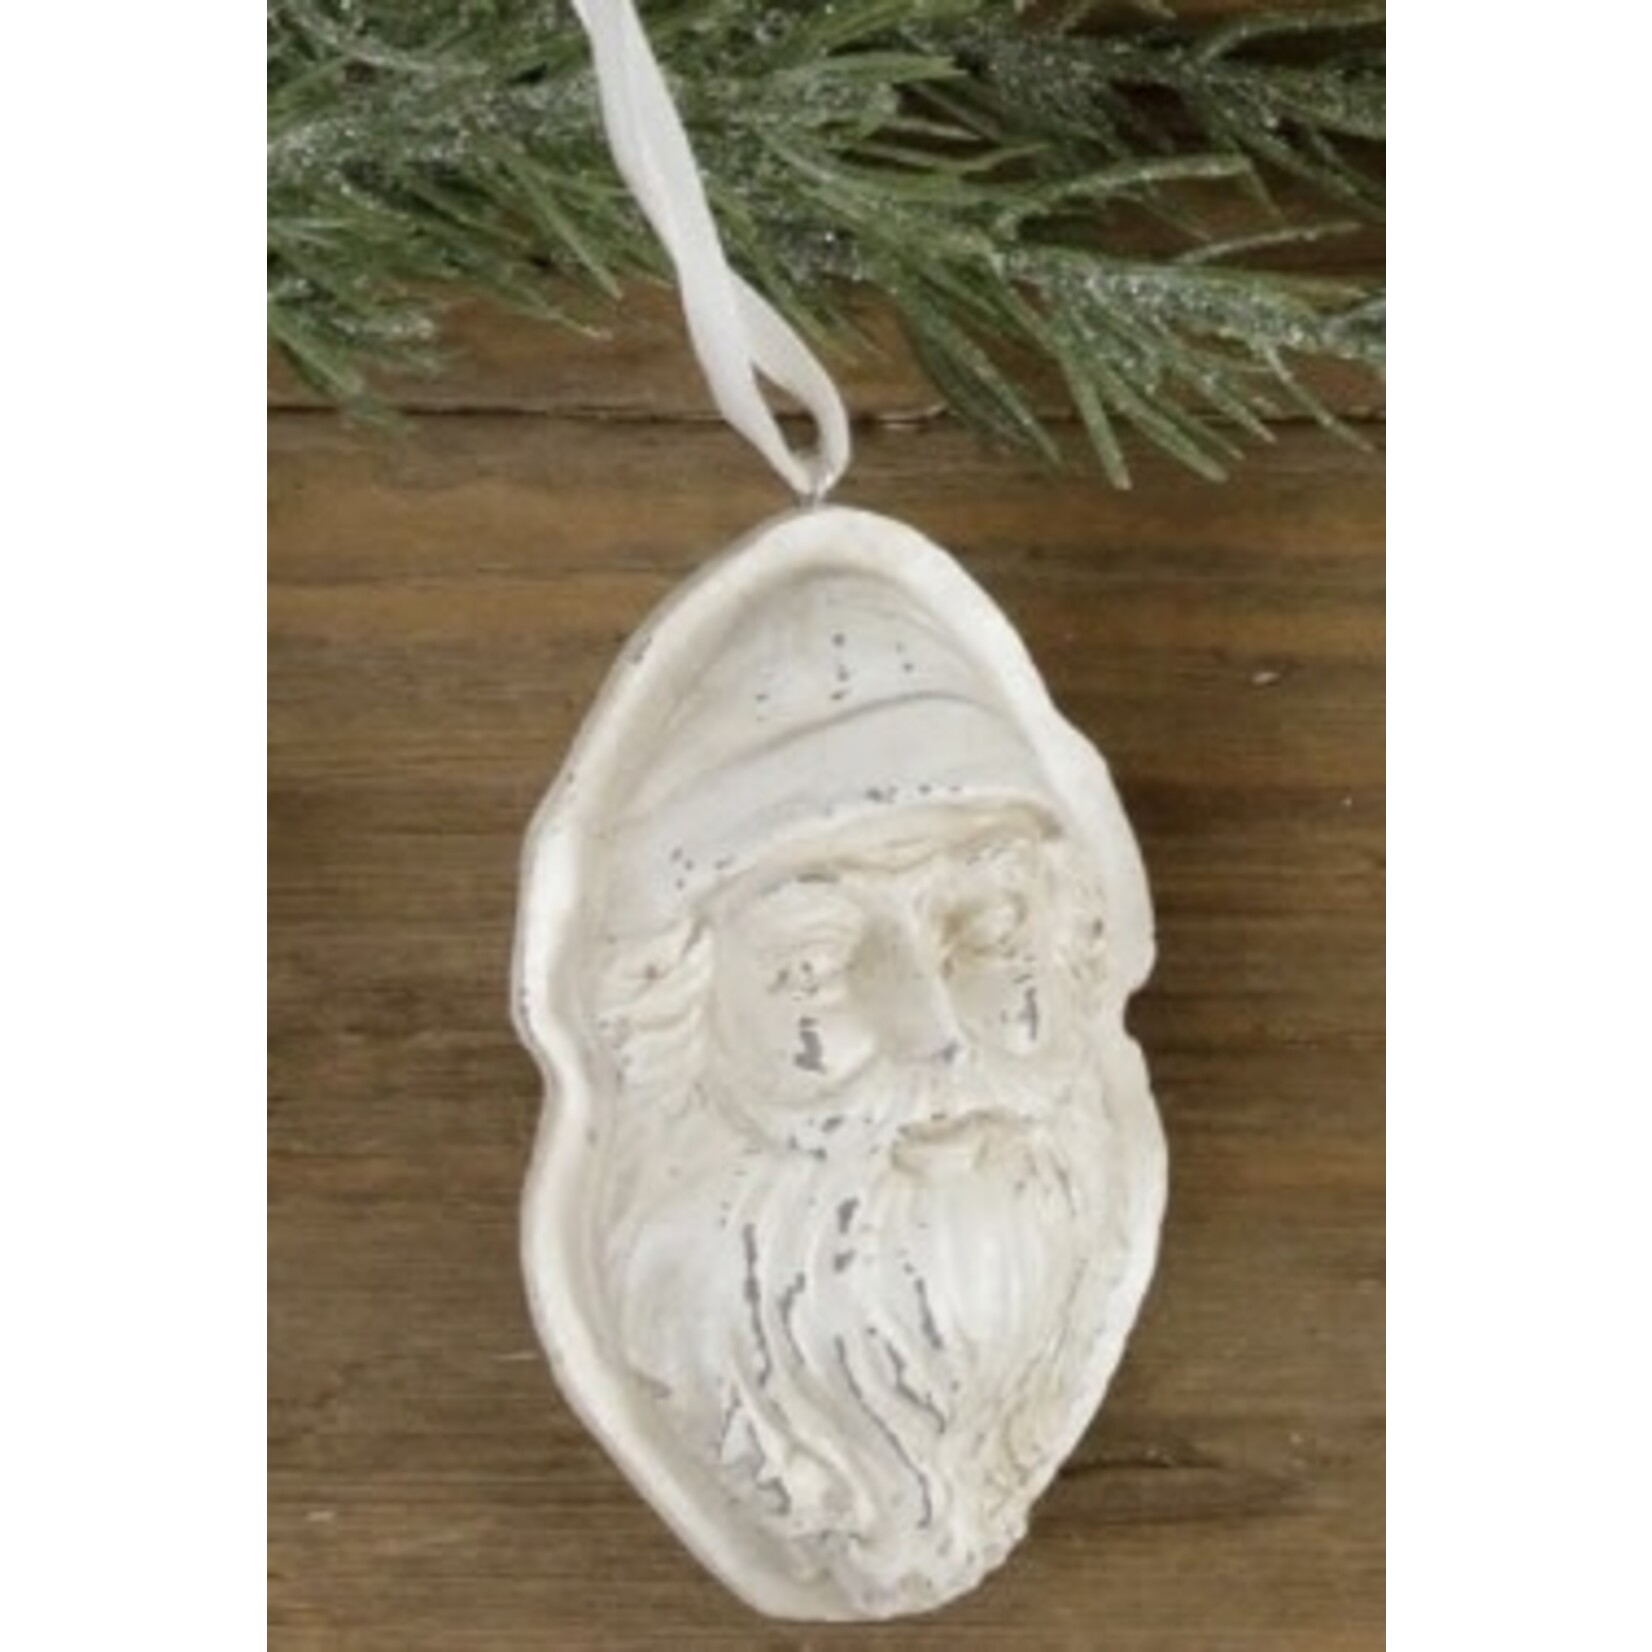 Audrey’s Christmas Mold Ornament Santa